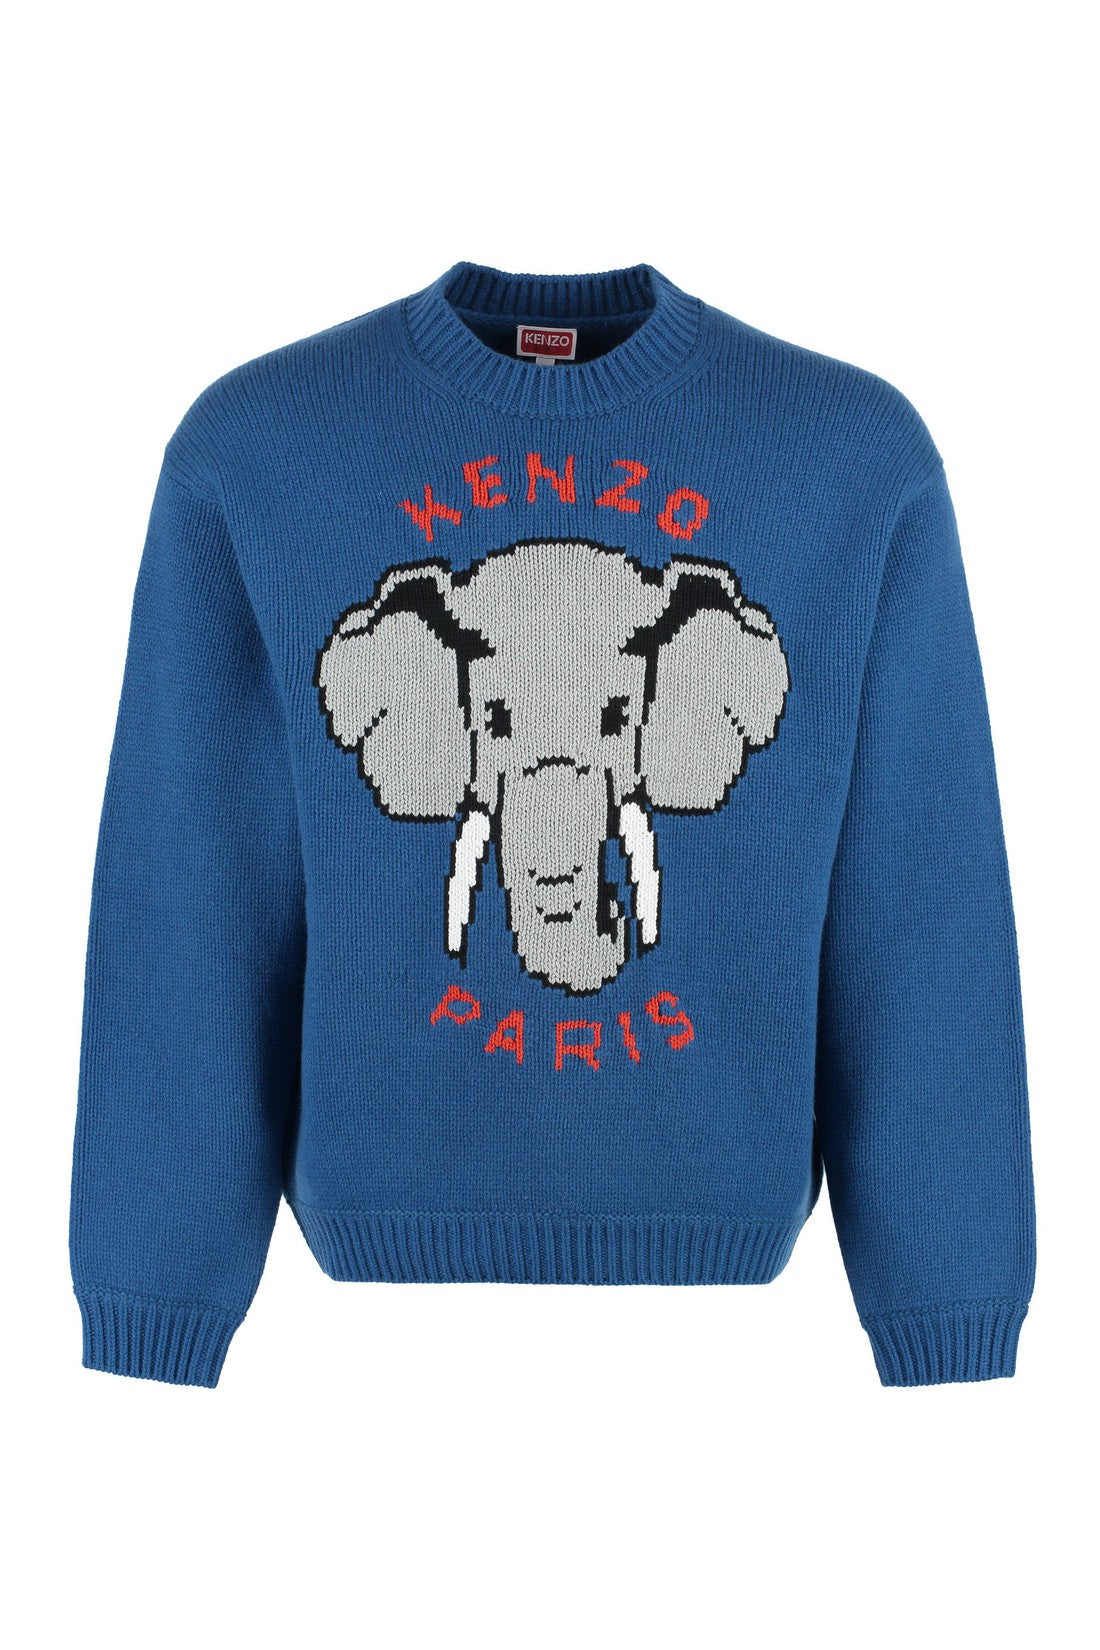 Kenzo-OUTLET-SALE-Wool-cotton blend crew-neck sweater-ARCHIVIST